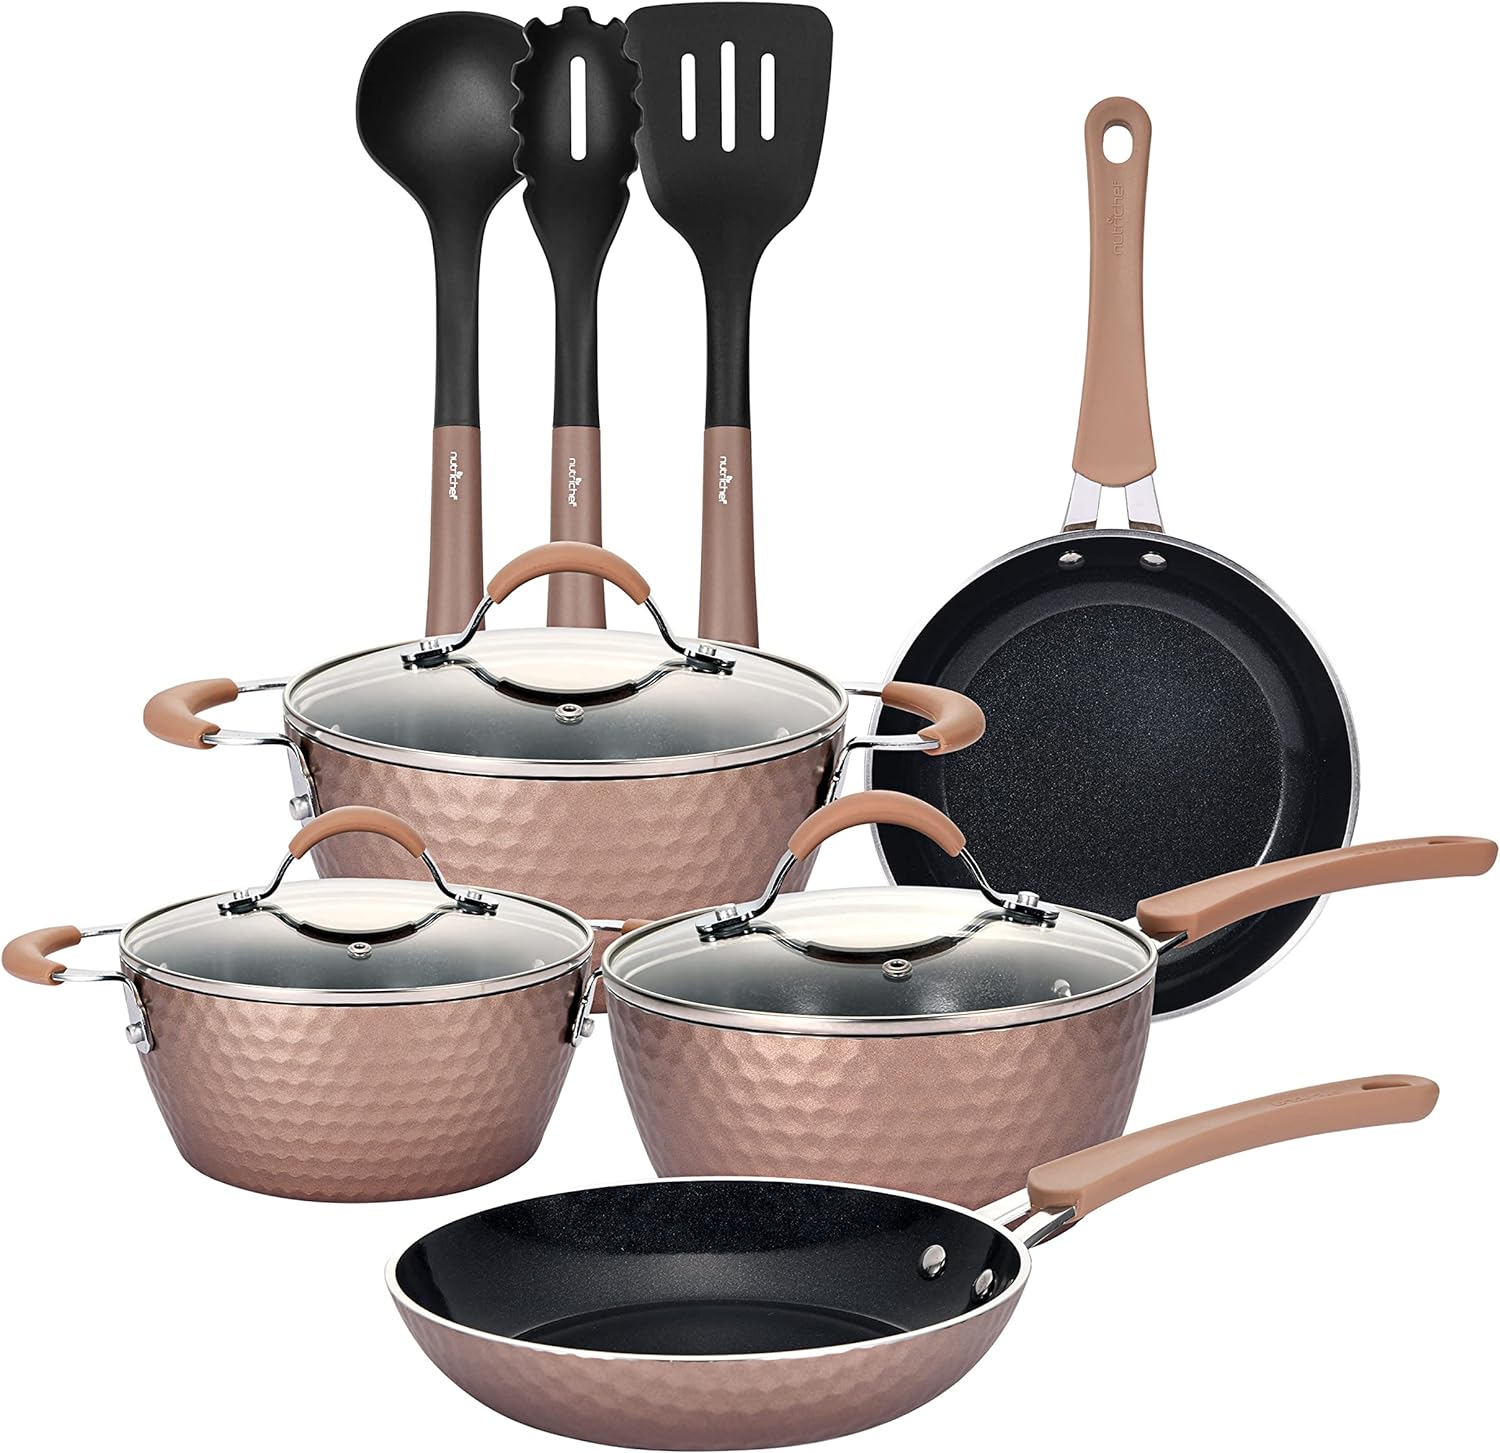 Nutrichef 11 Piece Nonstick Ceramic Cookware Excilon Home Kitchen Ware Pots & Pan Set with Saucepan Frying Pans, Cooking Pots, Lids, Utensil PTFE\/PFOA\/PFOS Free, Blue Diamond Pcs